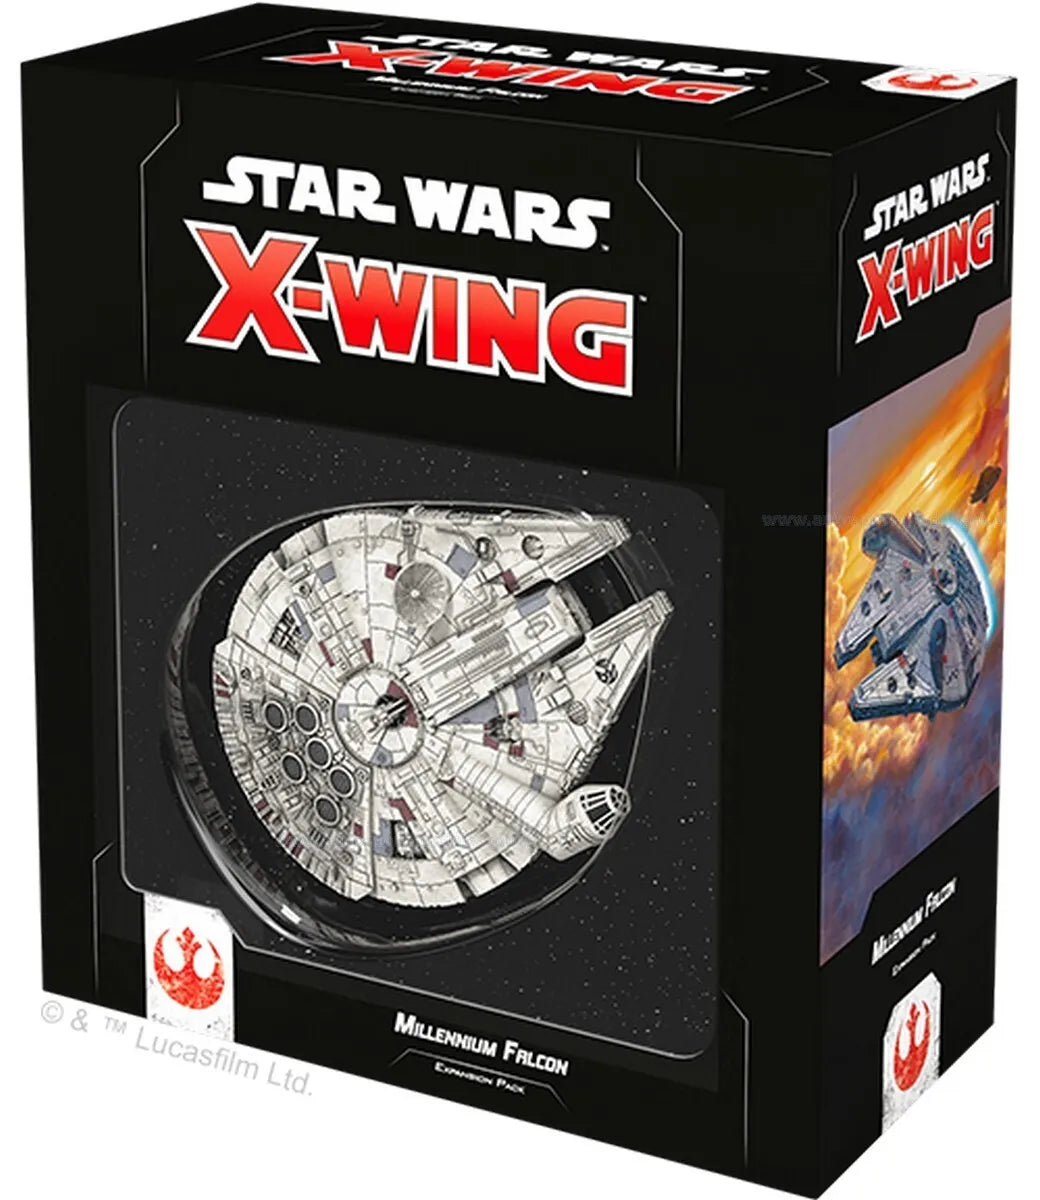 Star Wars X-Wing: Millennium Falcon - Loaded Dice Barry Vale of Glamorgan CF64 3HD